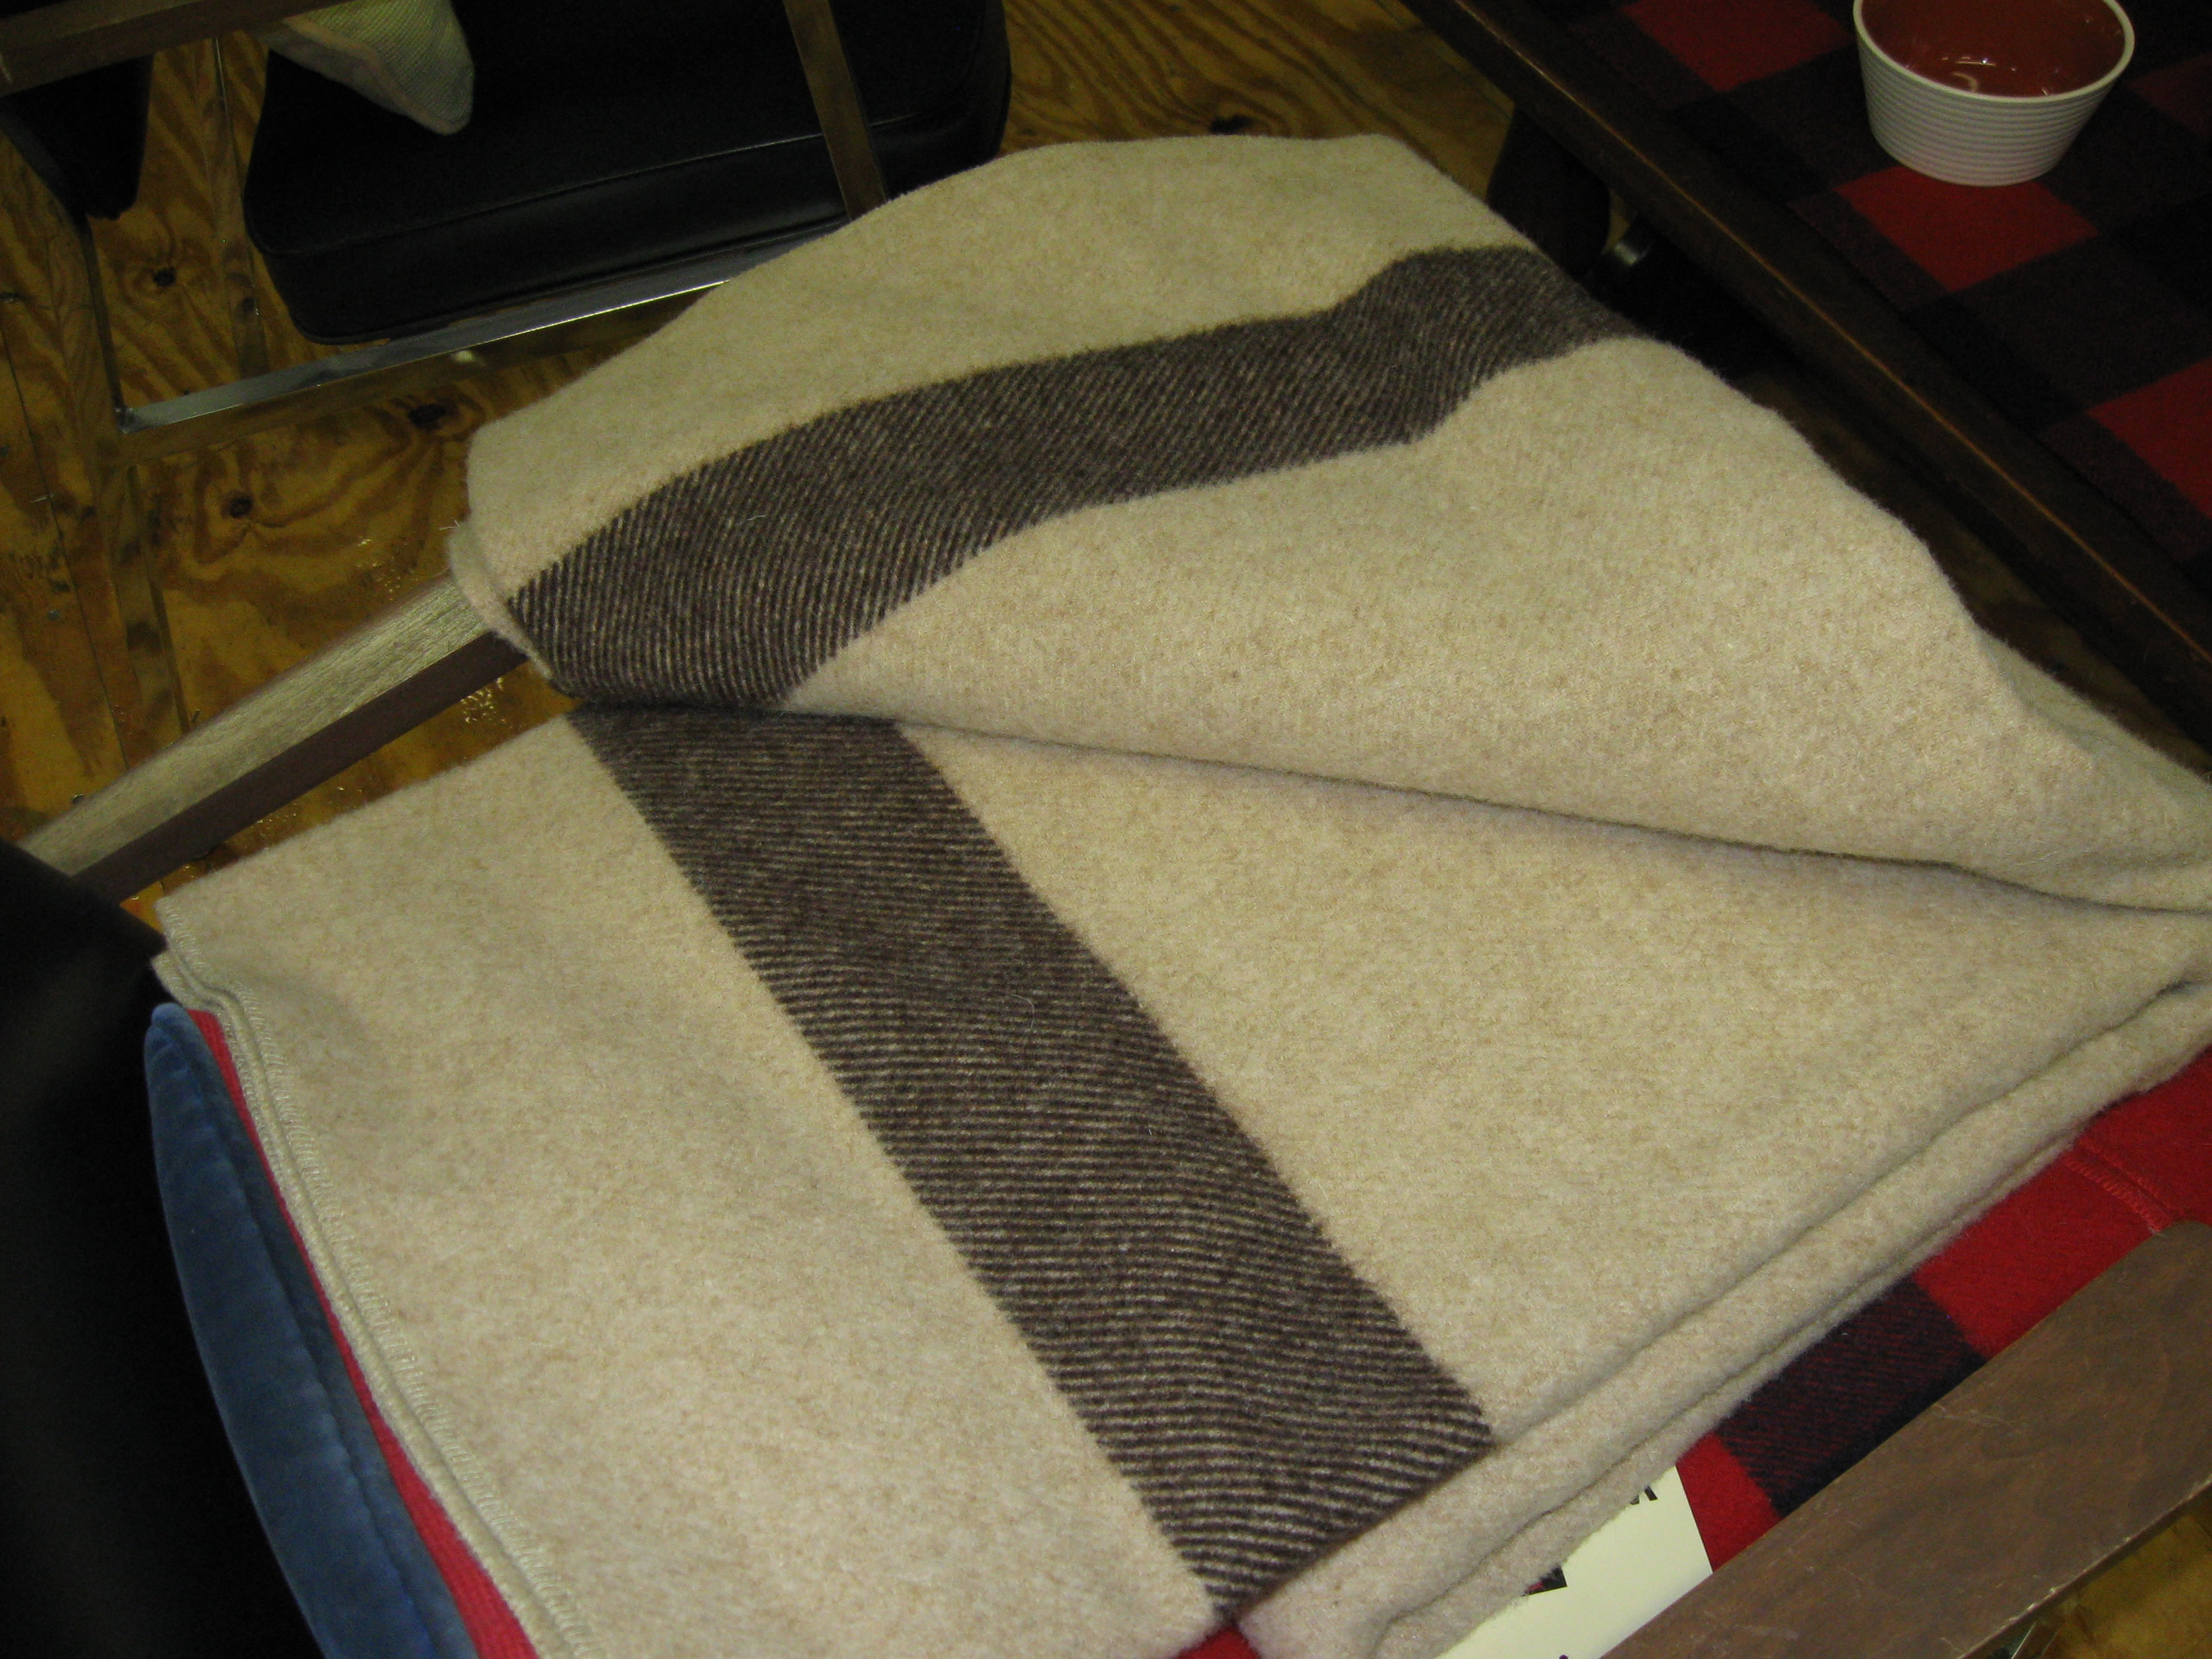 Woolrich Civil War commemorative blanket